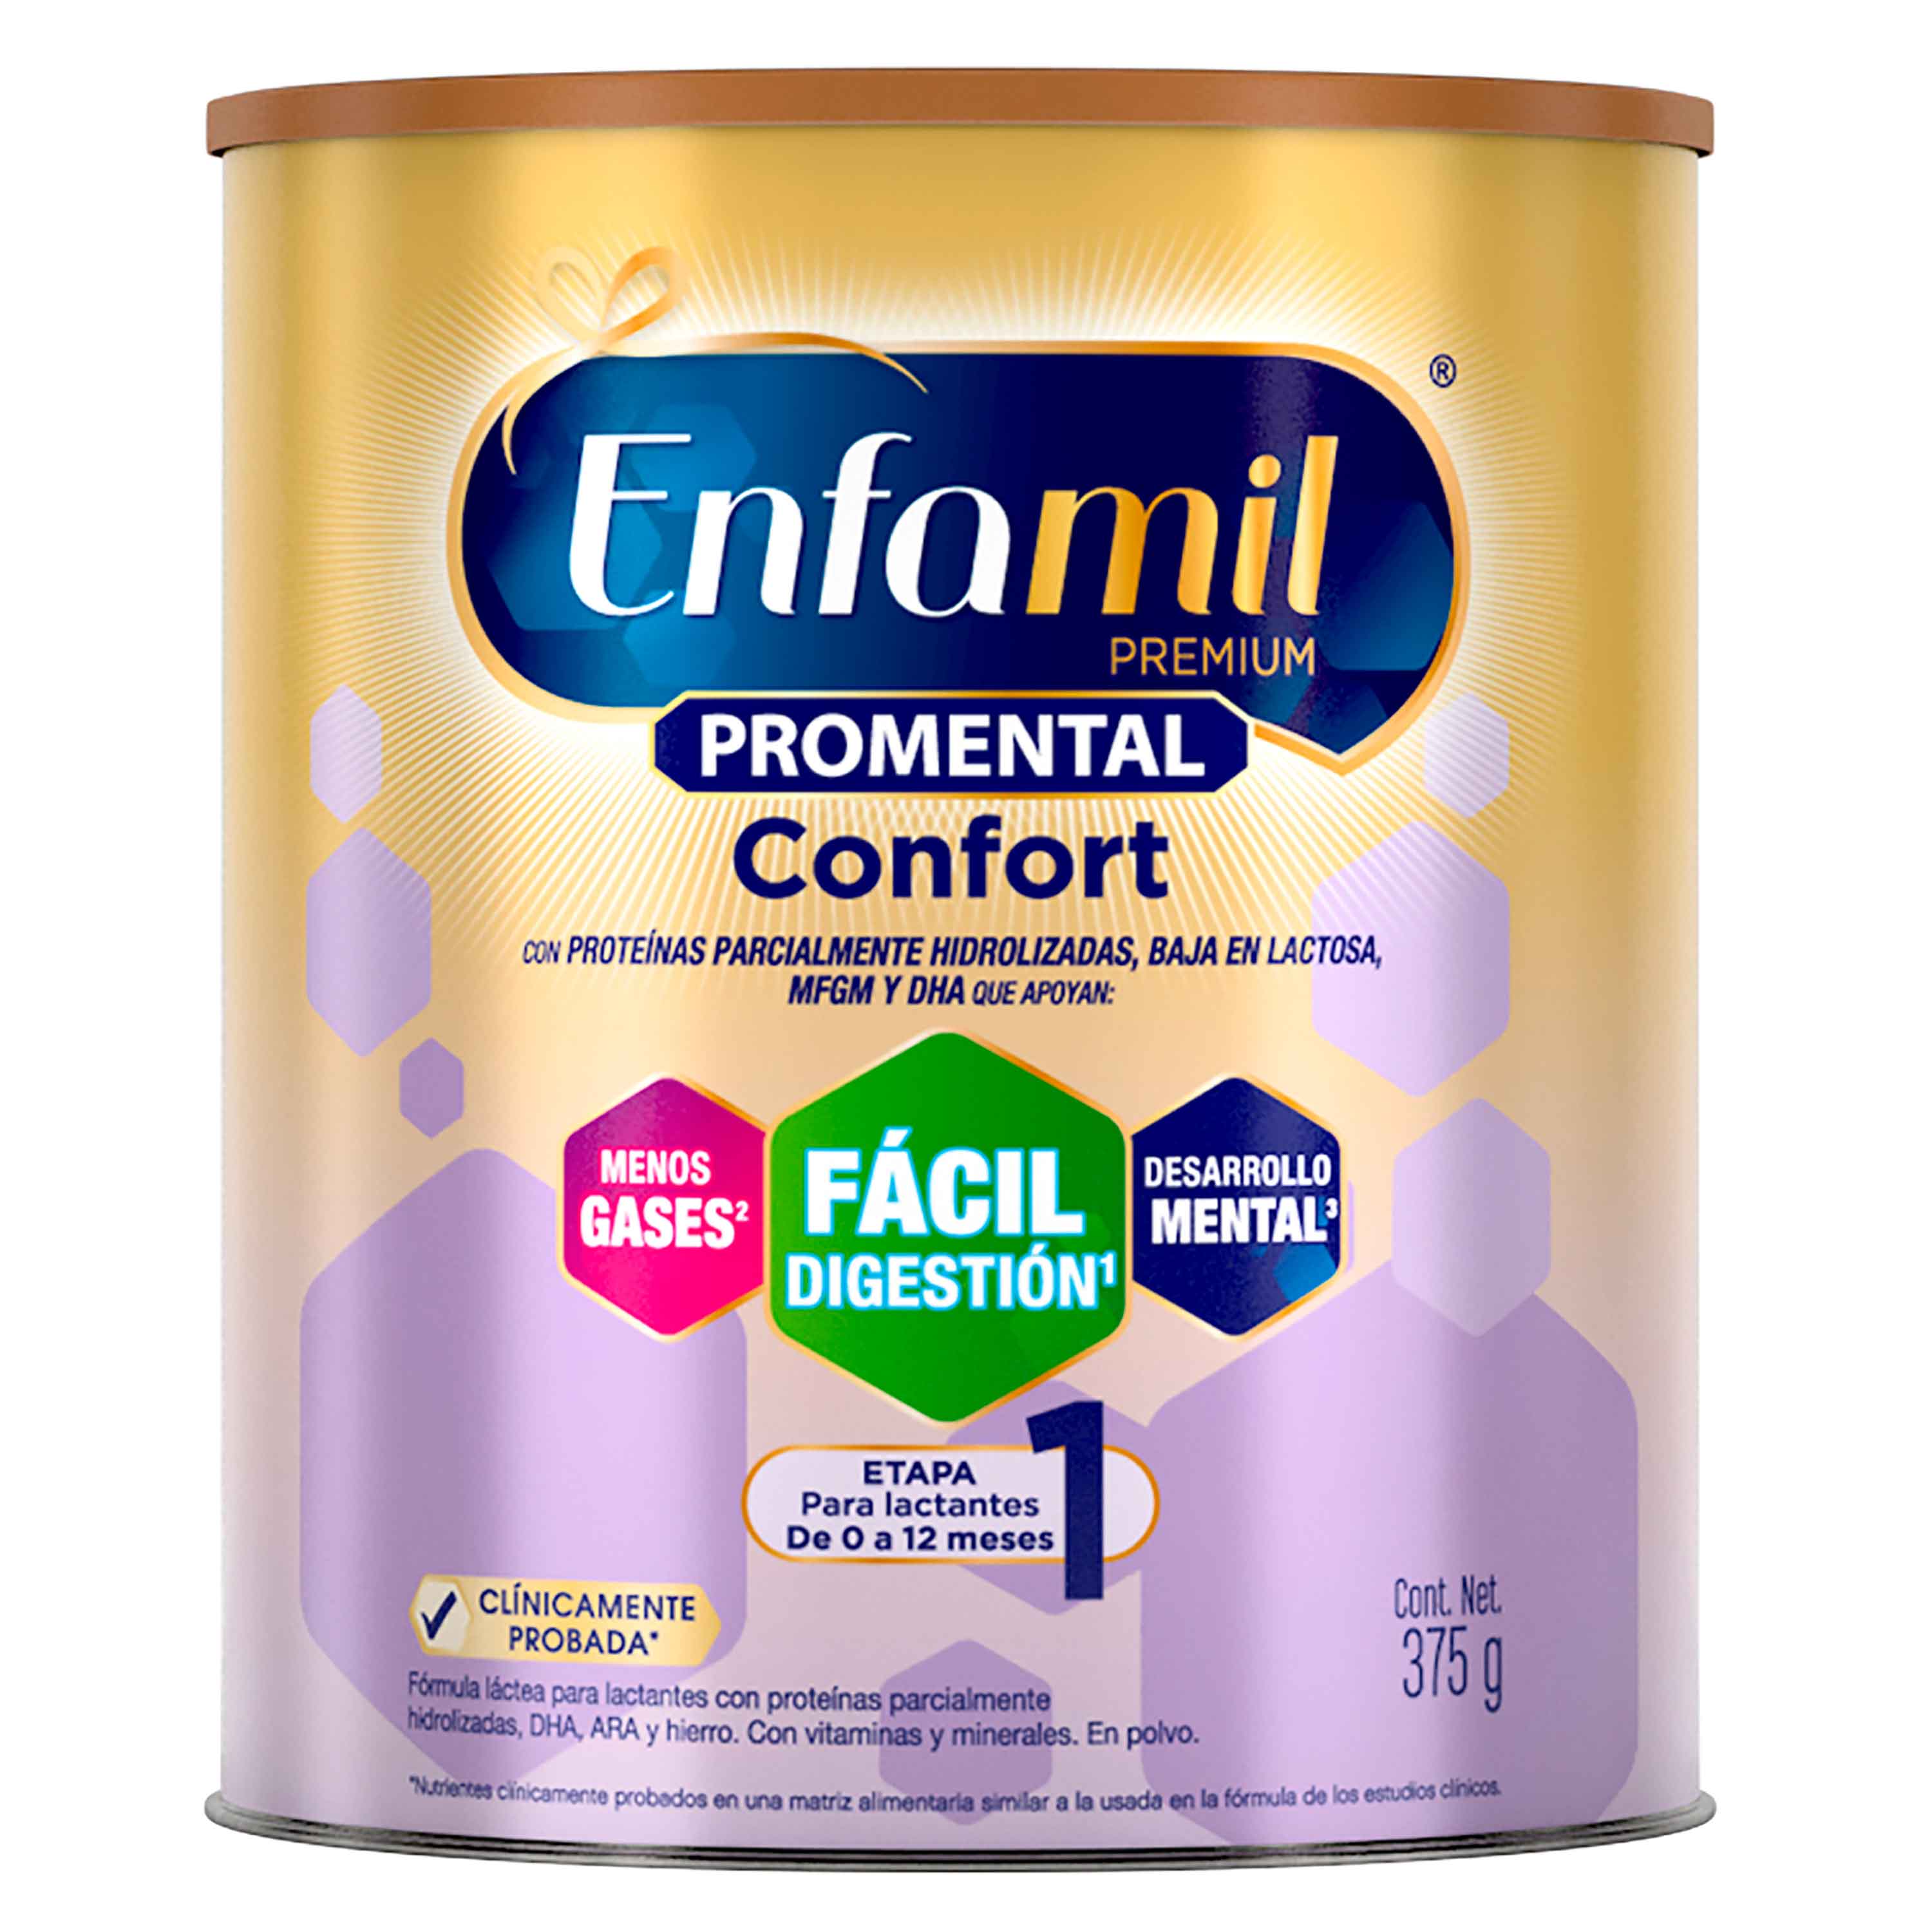 Enfamil Confort Promental 1.65 kg / 3.6 lb, Bebé, Pricesmart, Managua